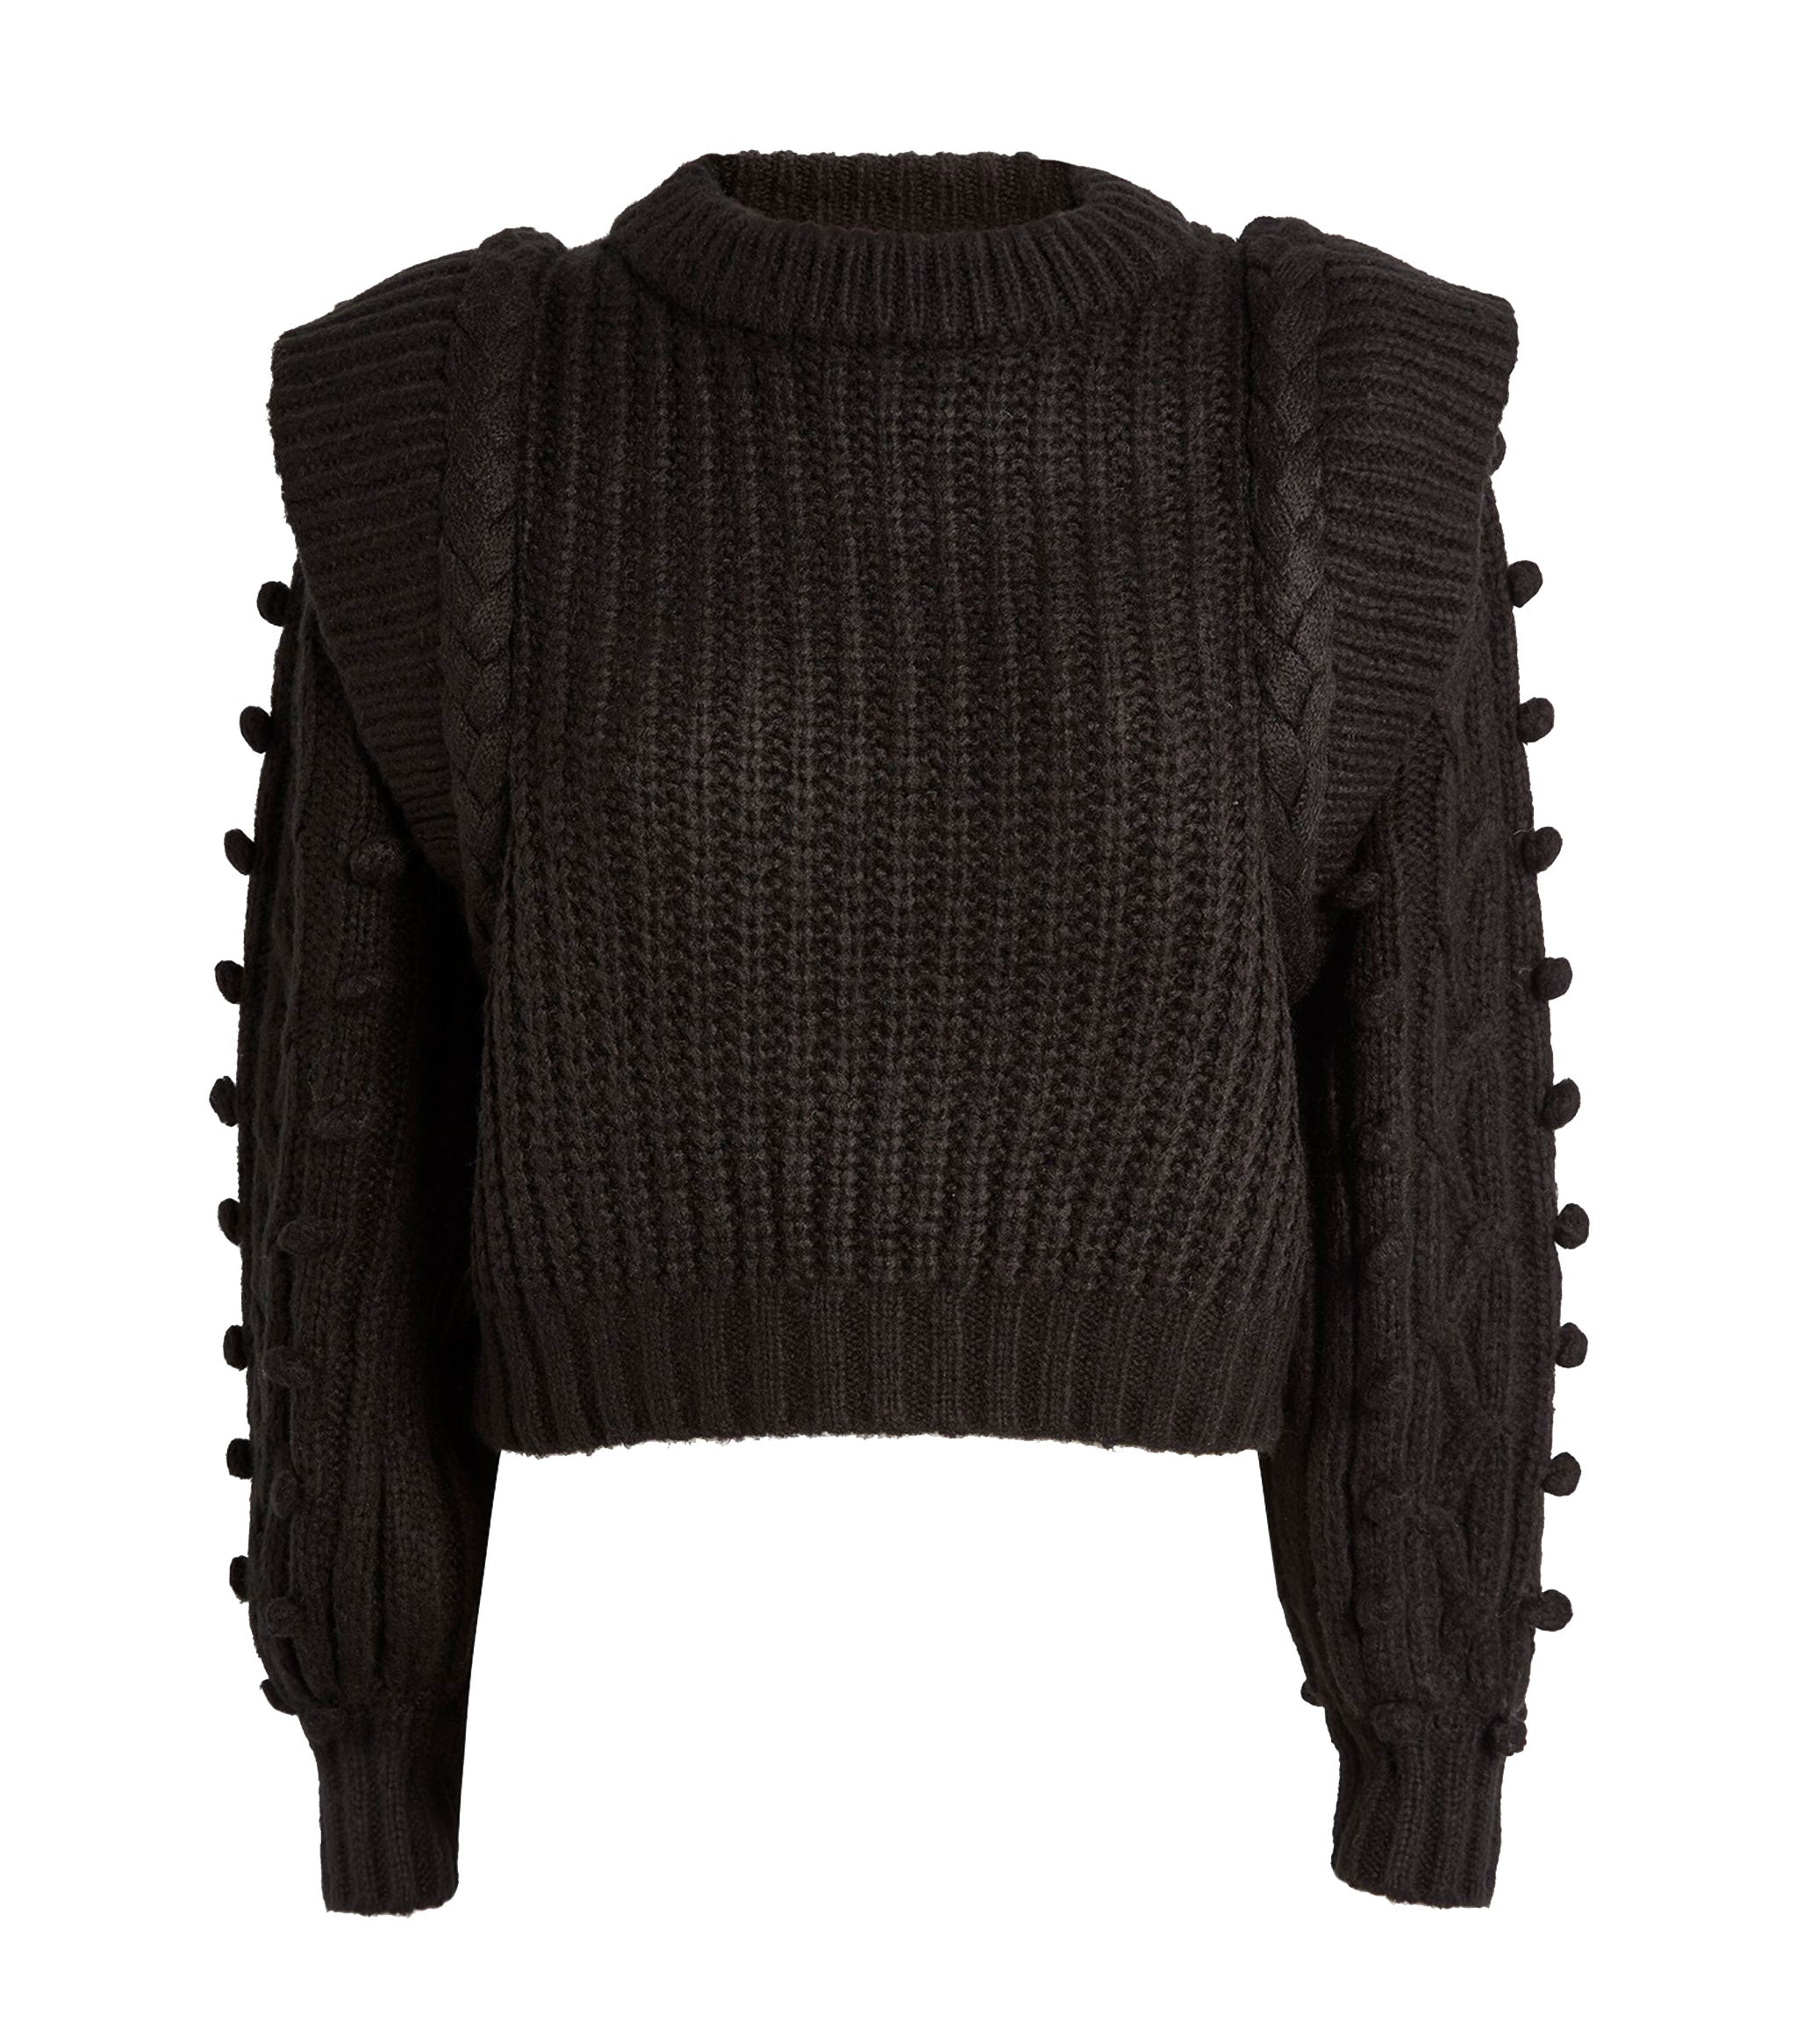 Shop Farm Rio Women's Black Braided Sweater, Black Chunky Knit